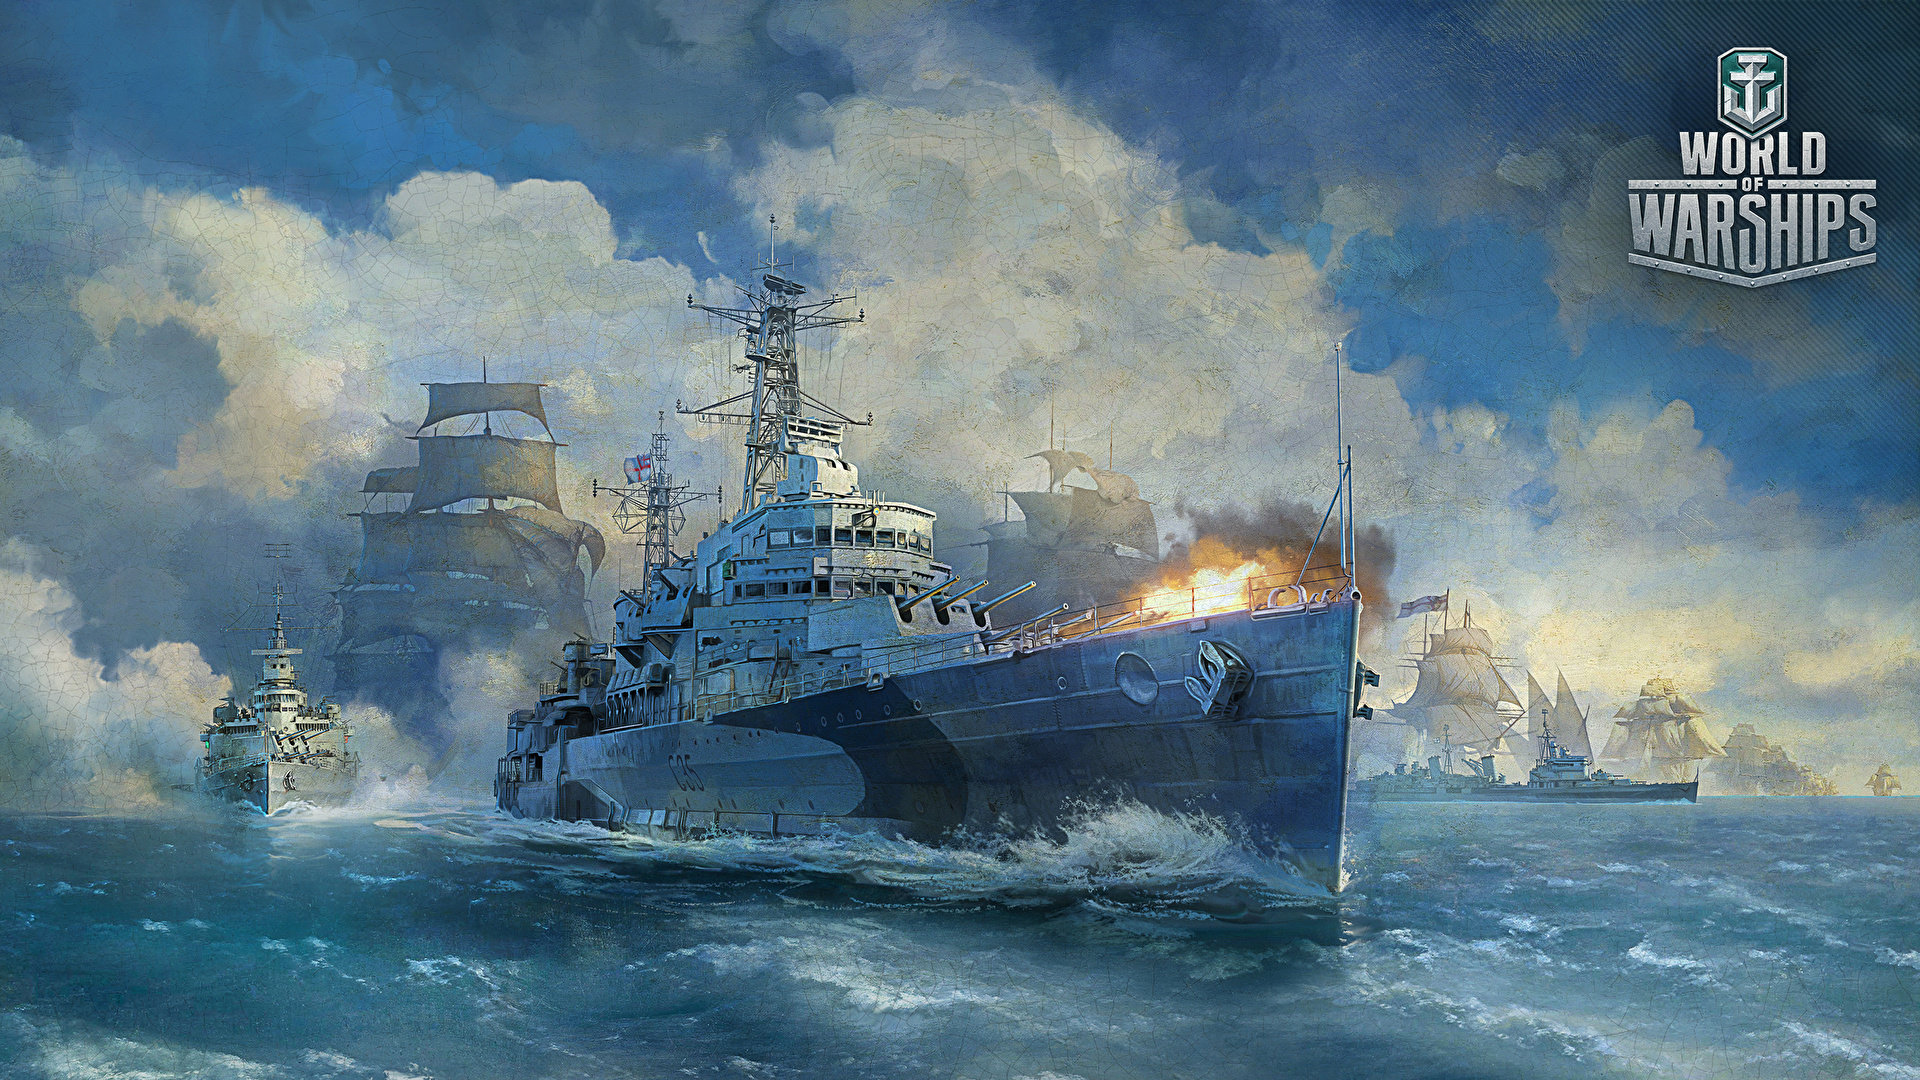 warship wallpaper,warship,ship,naval ship,vehicle,battleship